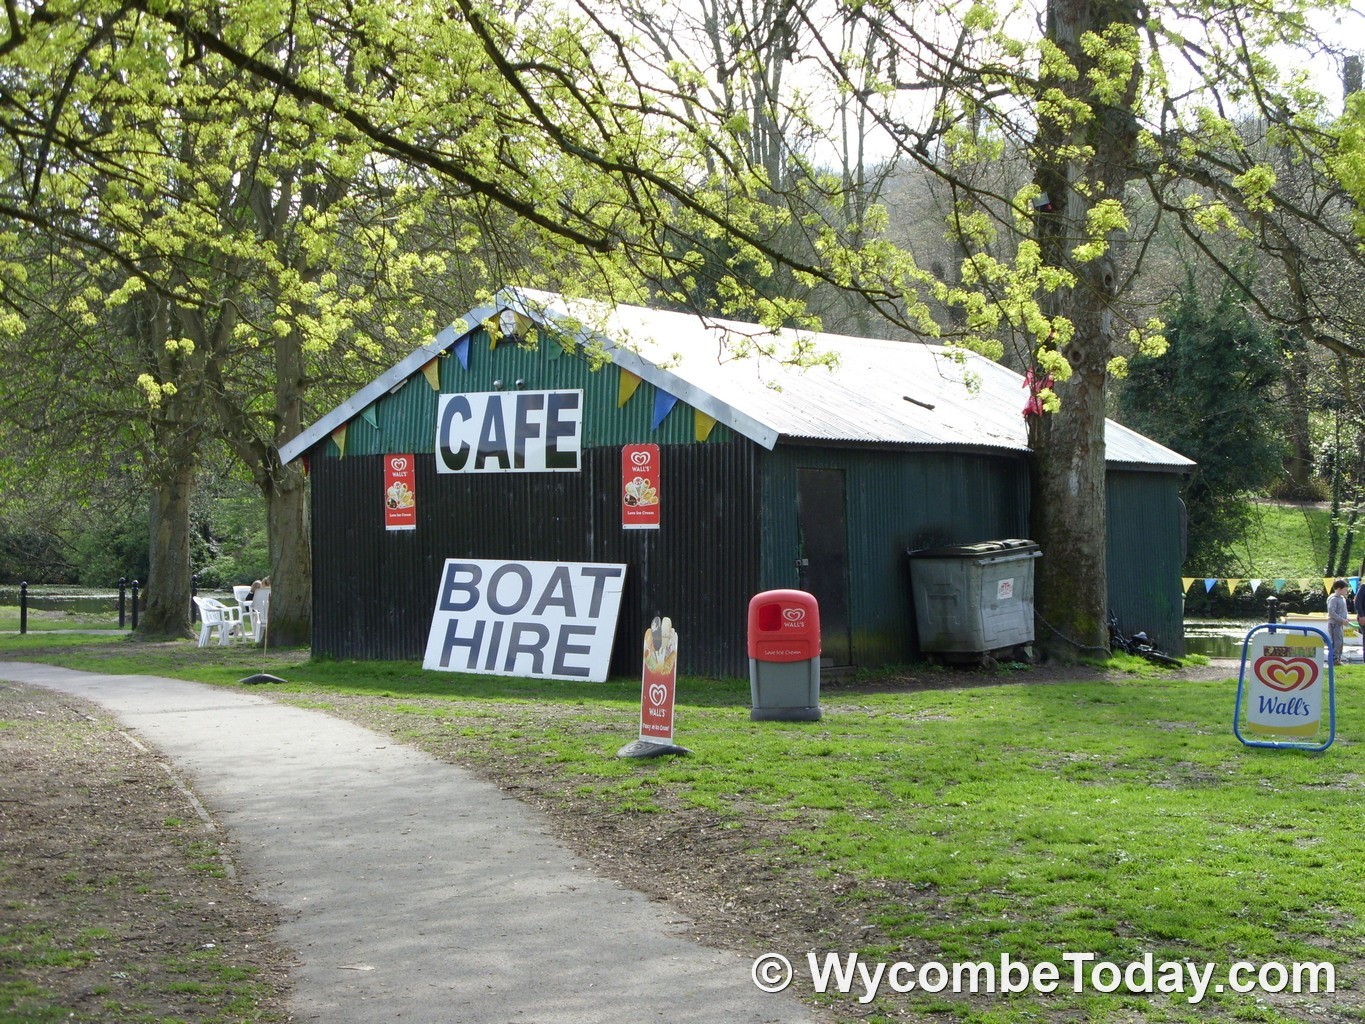 HighWycombe-TheRye-CafeAndBoathouse-2014-04-09-SDC10850